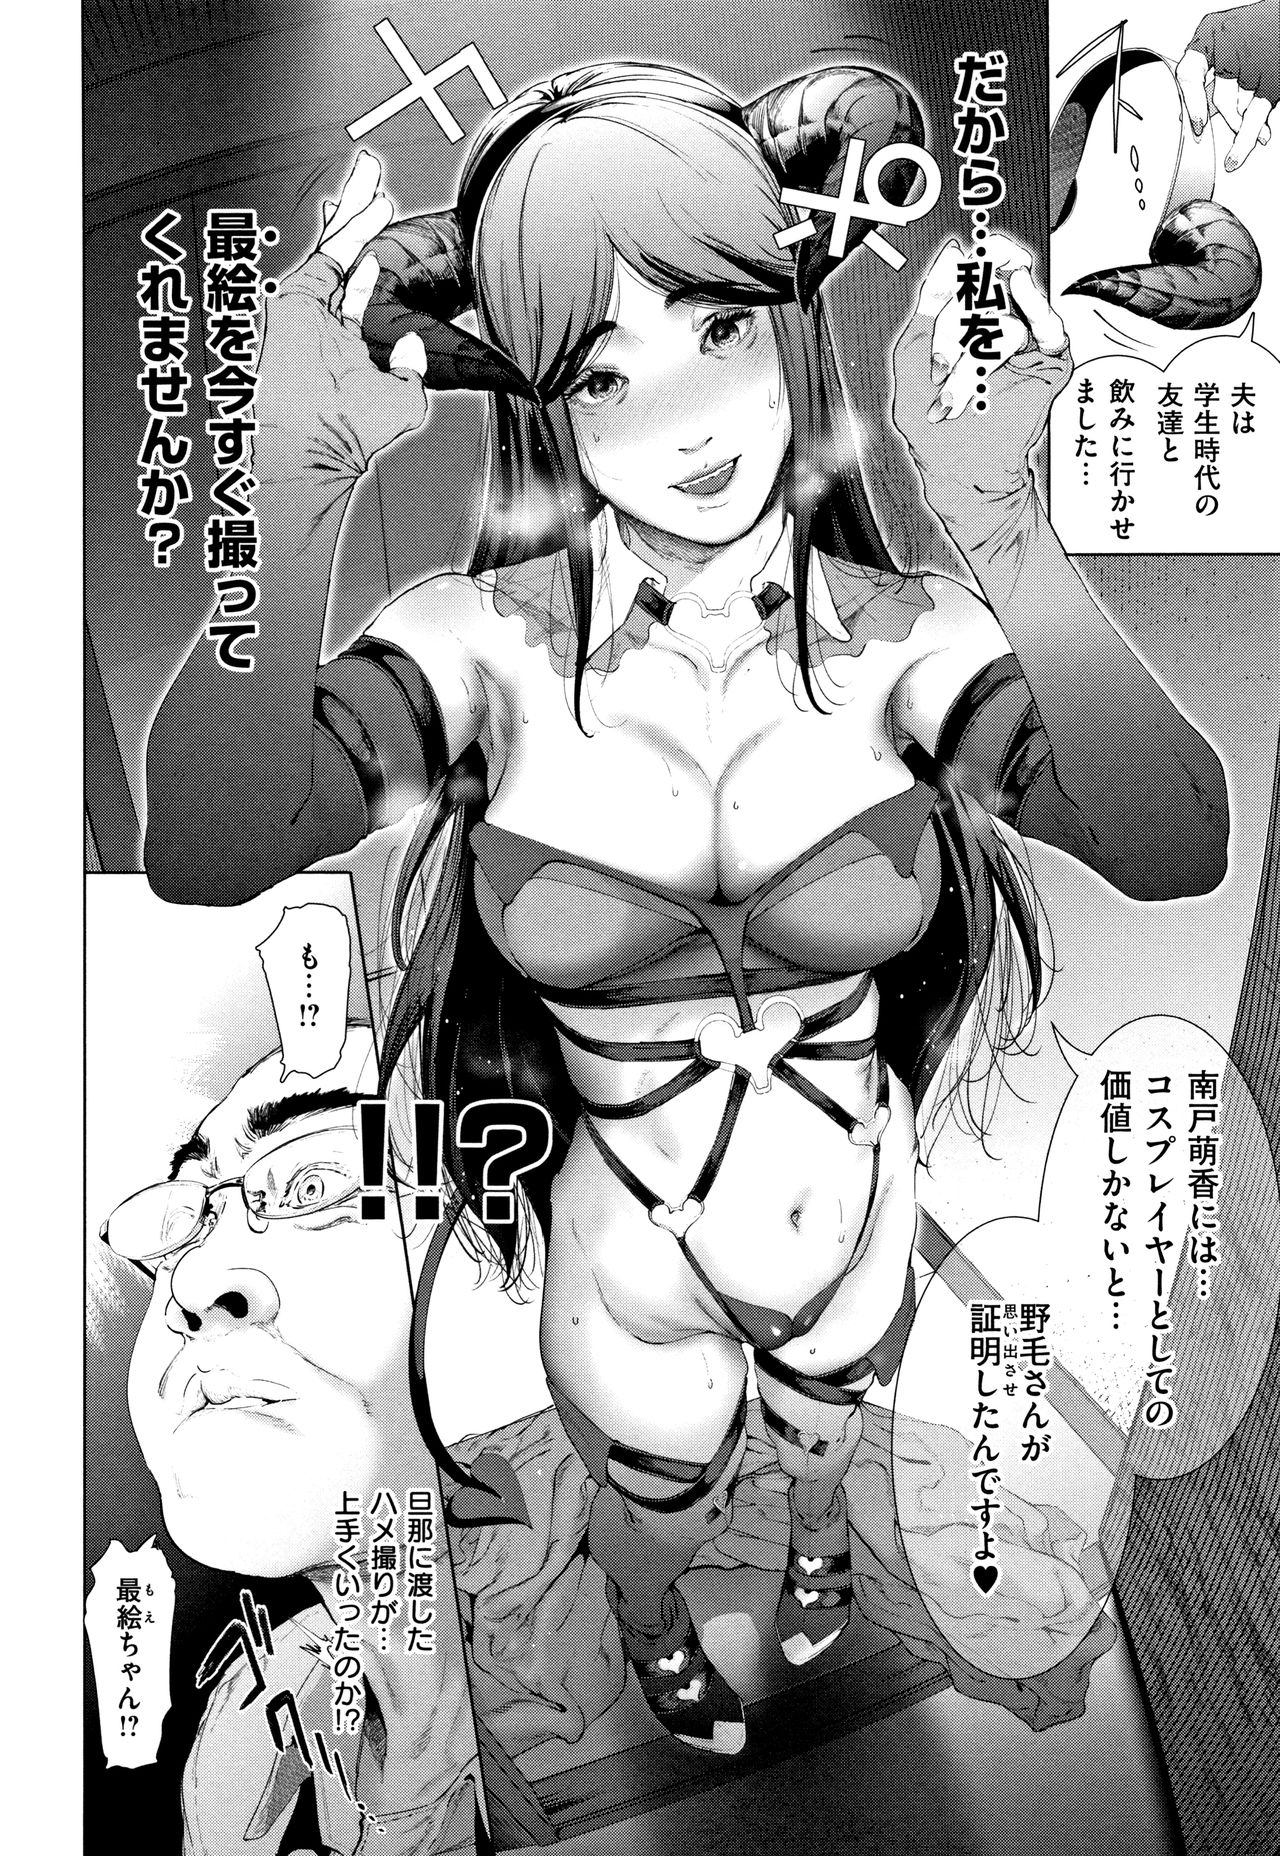 [Suzuhane Suzu] Cos wa Midara na Kamen Shogyouban - Cosplay is a mask [wakes up erotic personality...] 72